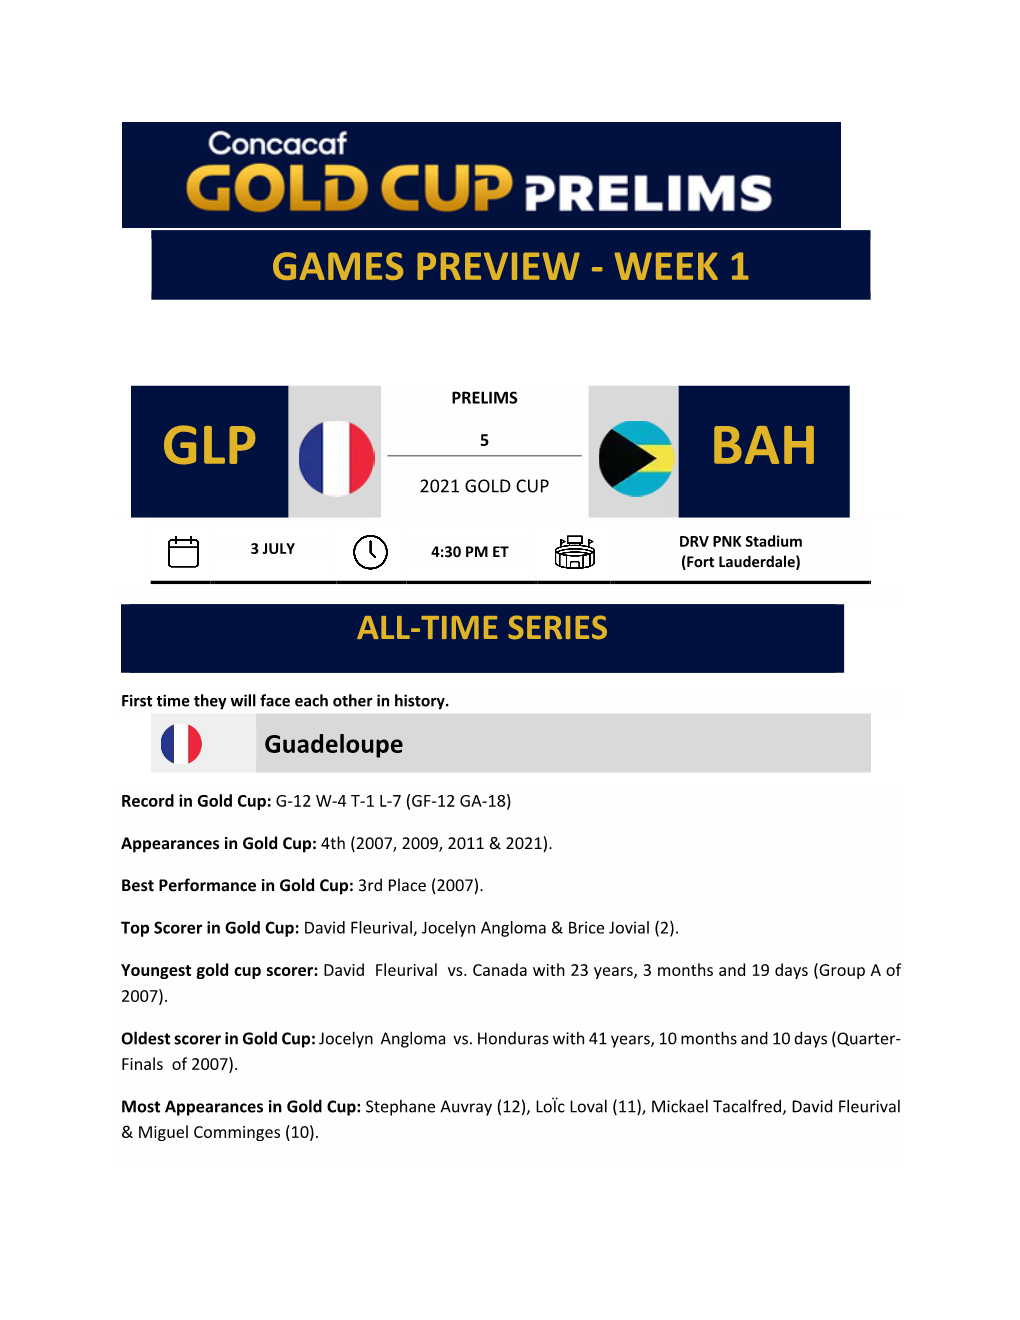 Glp 5 Bah 2021 Gold Cup